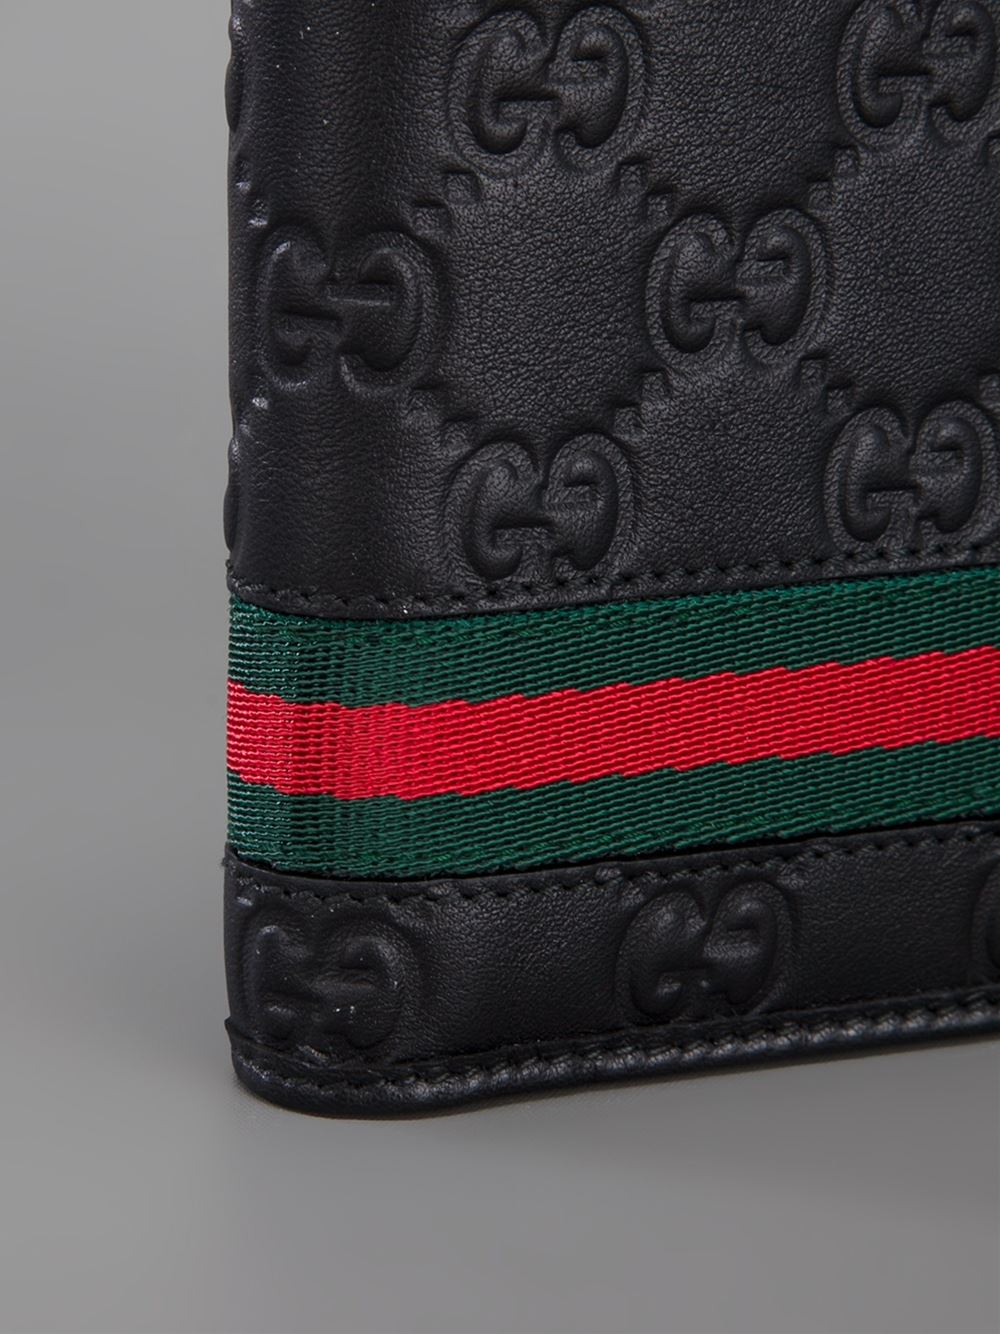 Lyst - Gucci Monogram Embossed Wallet in Black for Men